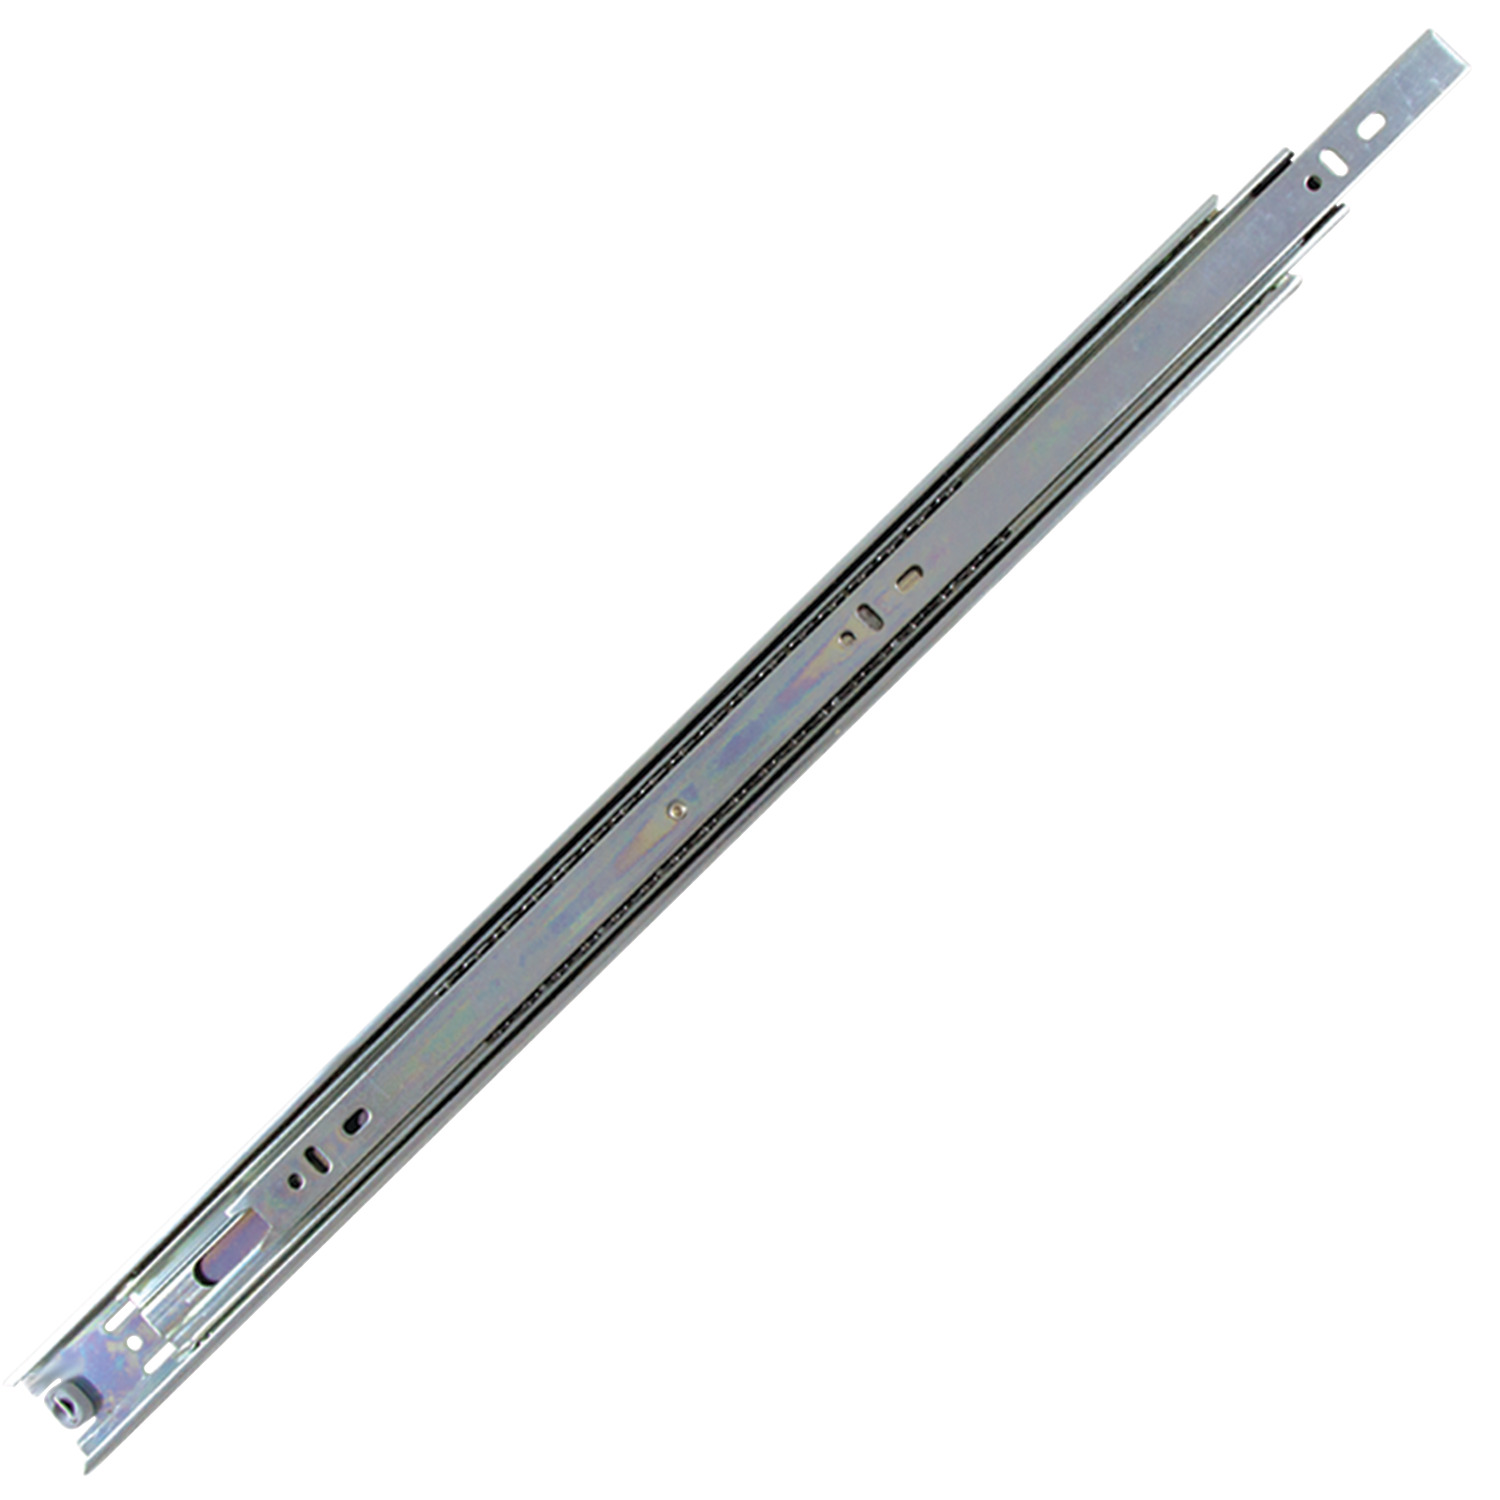 Product P2500, Drawer Slide - Full Extension 30 Kg load per pair / 